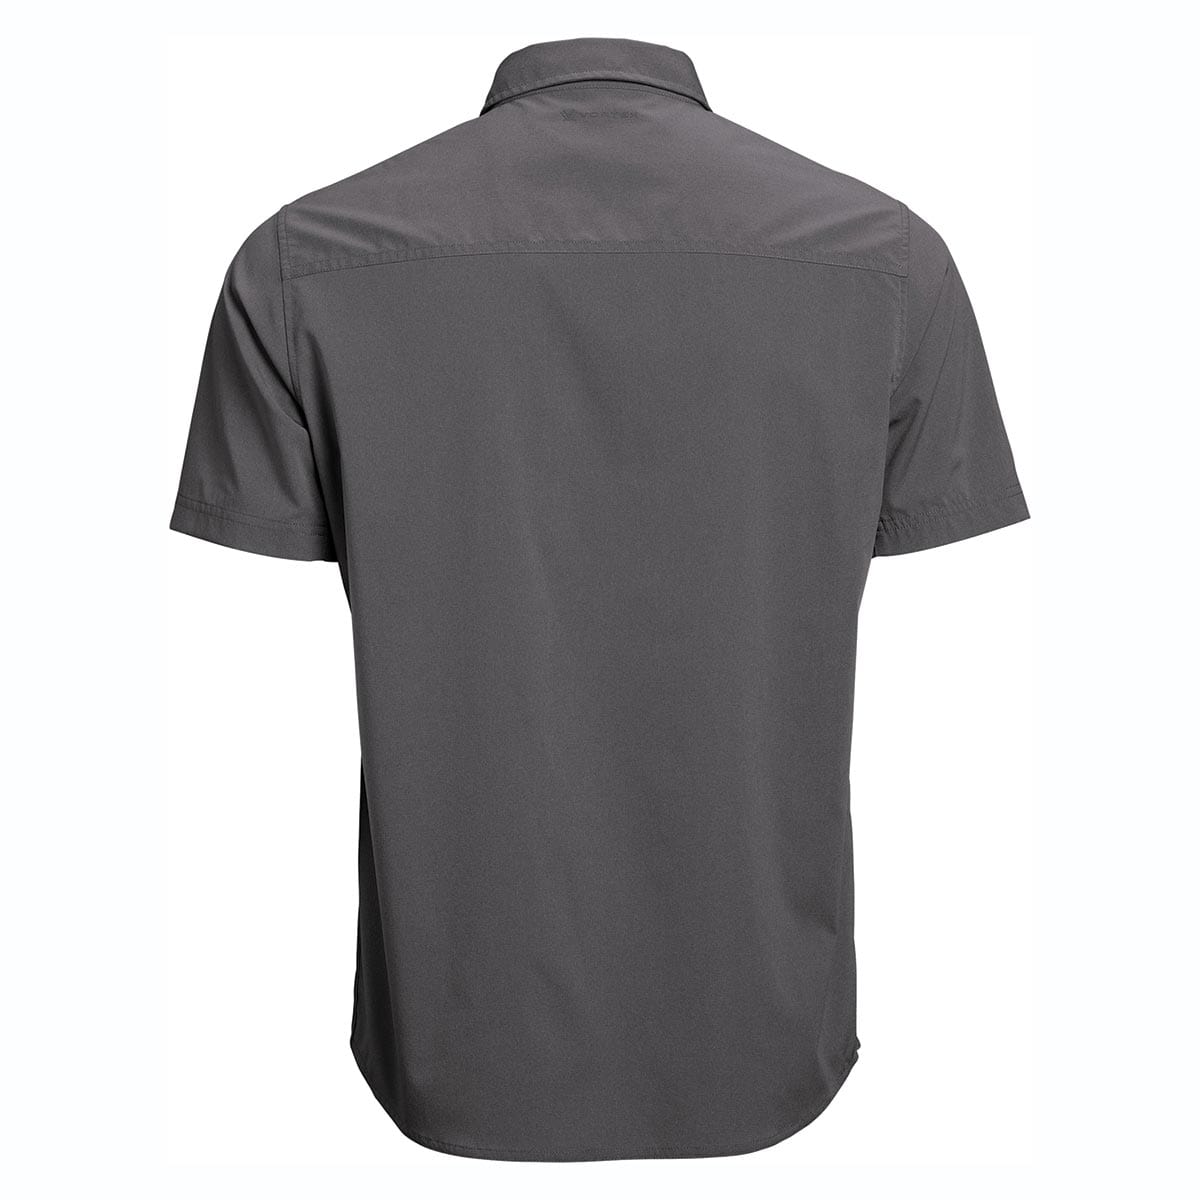 Vortex Optics Alpine Cove Short Sleeve Shirt